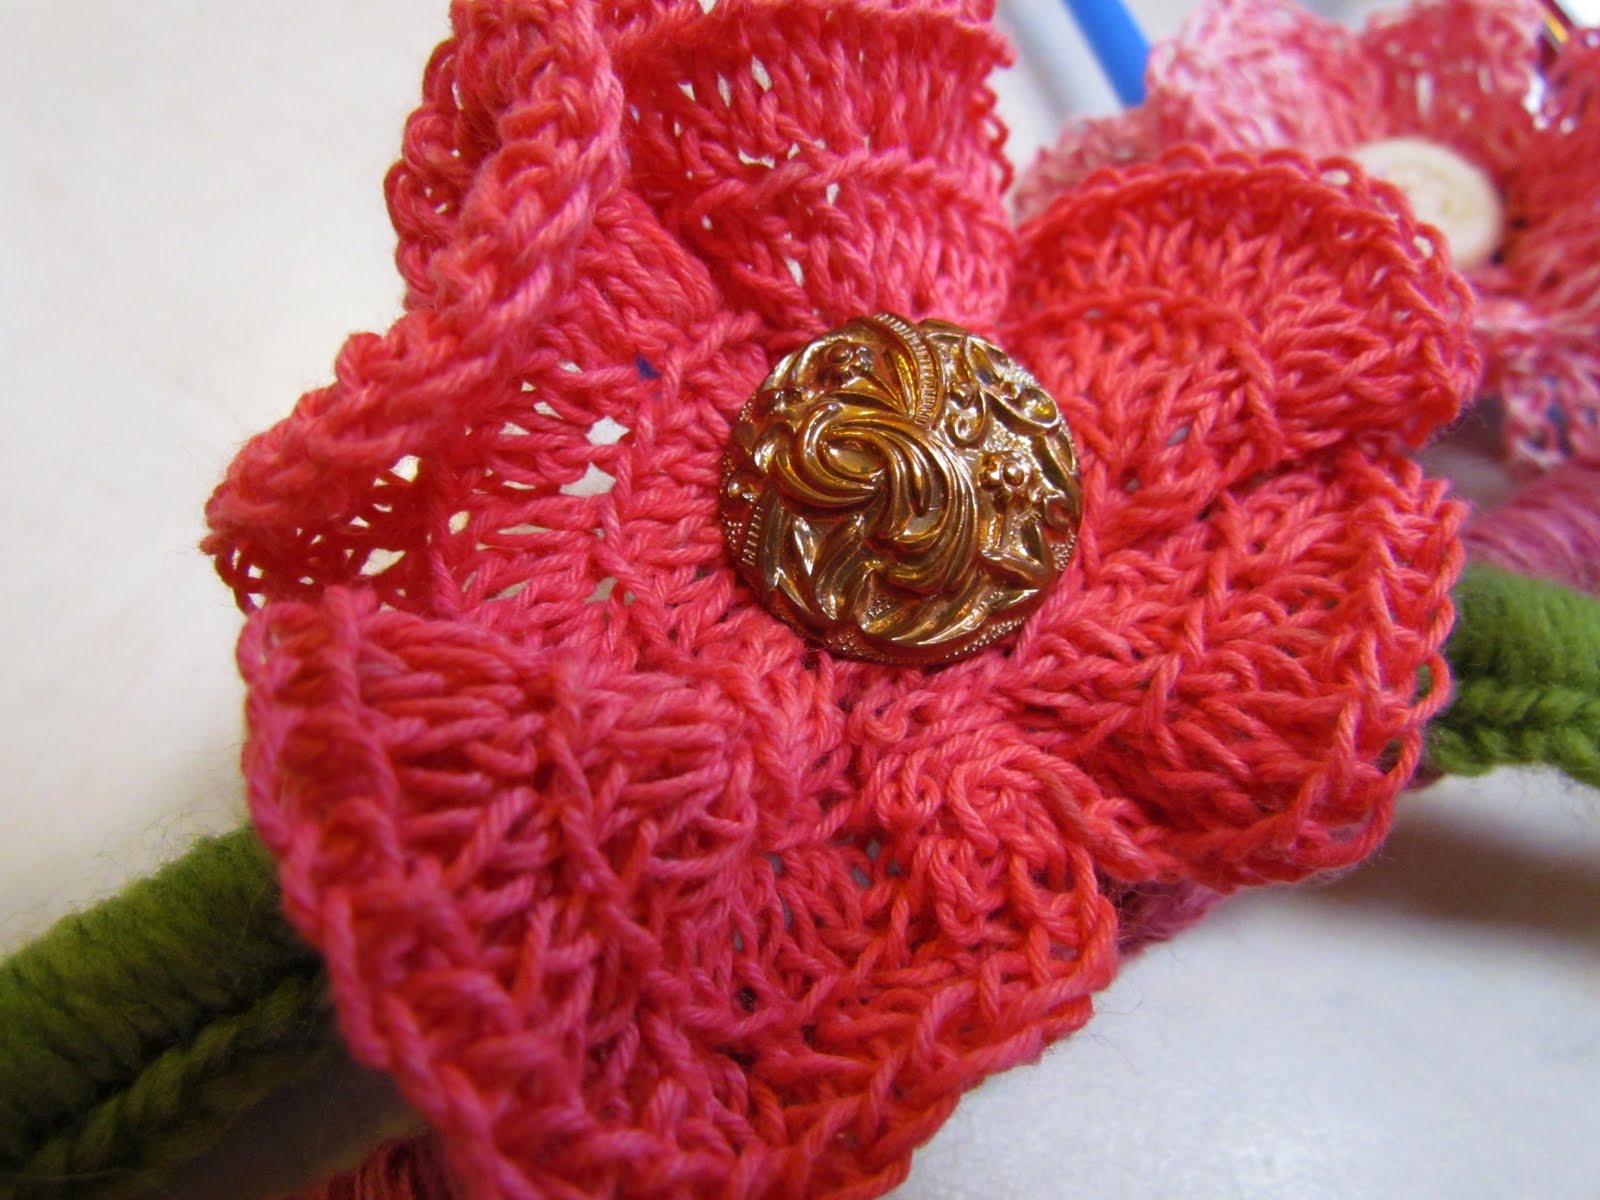 twobutterflies: Crocheted Hangers